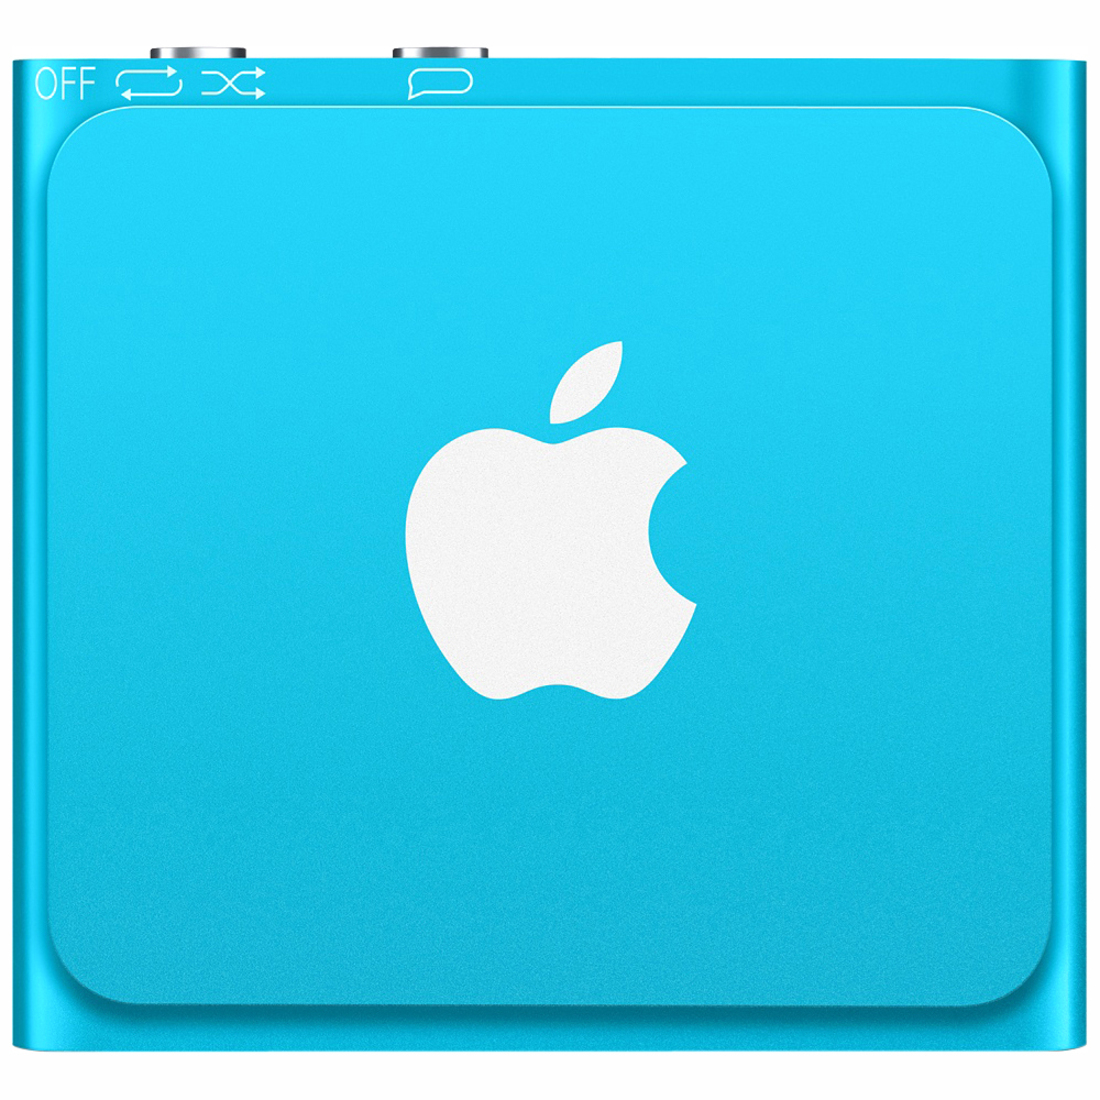 Apple iPod shuffle 2GB MP3 Player, Blue - image 2 of 6